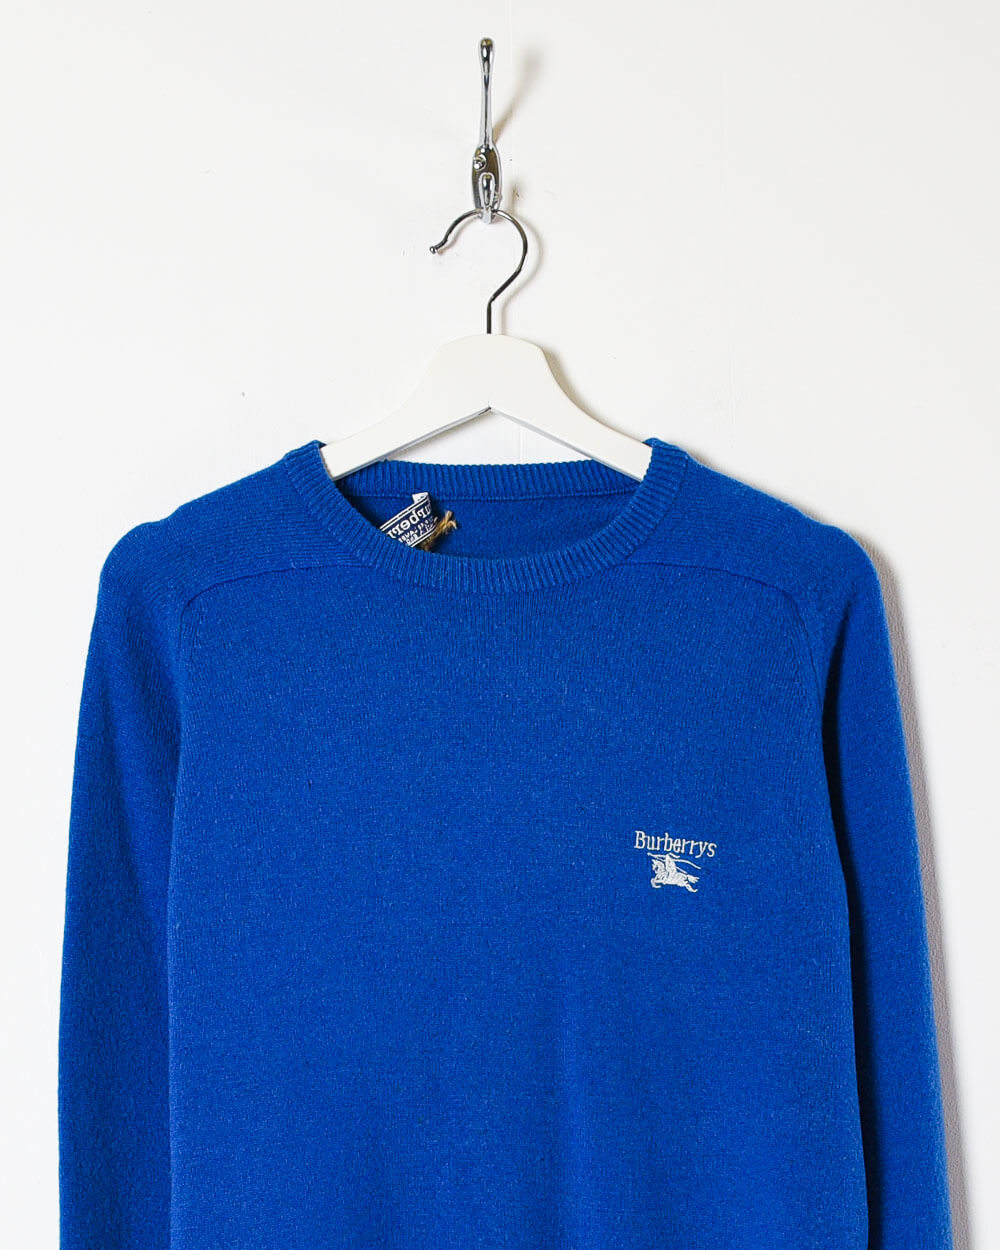 Blue Burberrys Knitted Sweatshirt - Medium